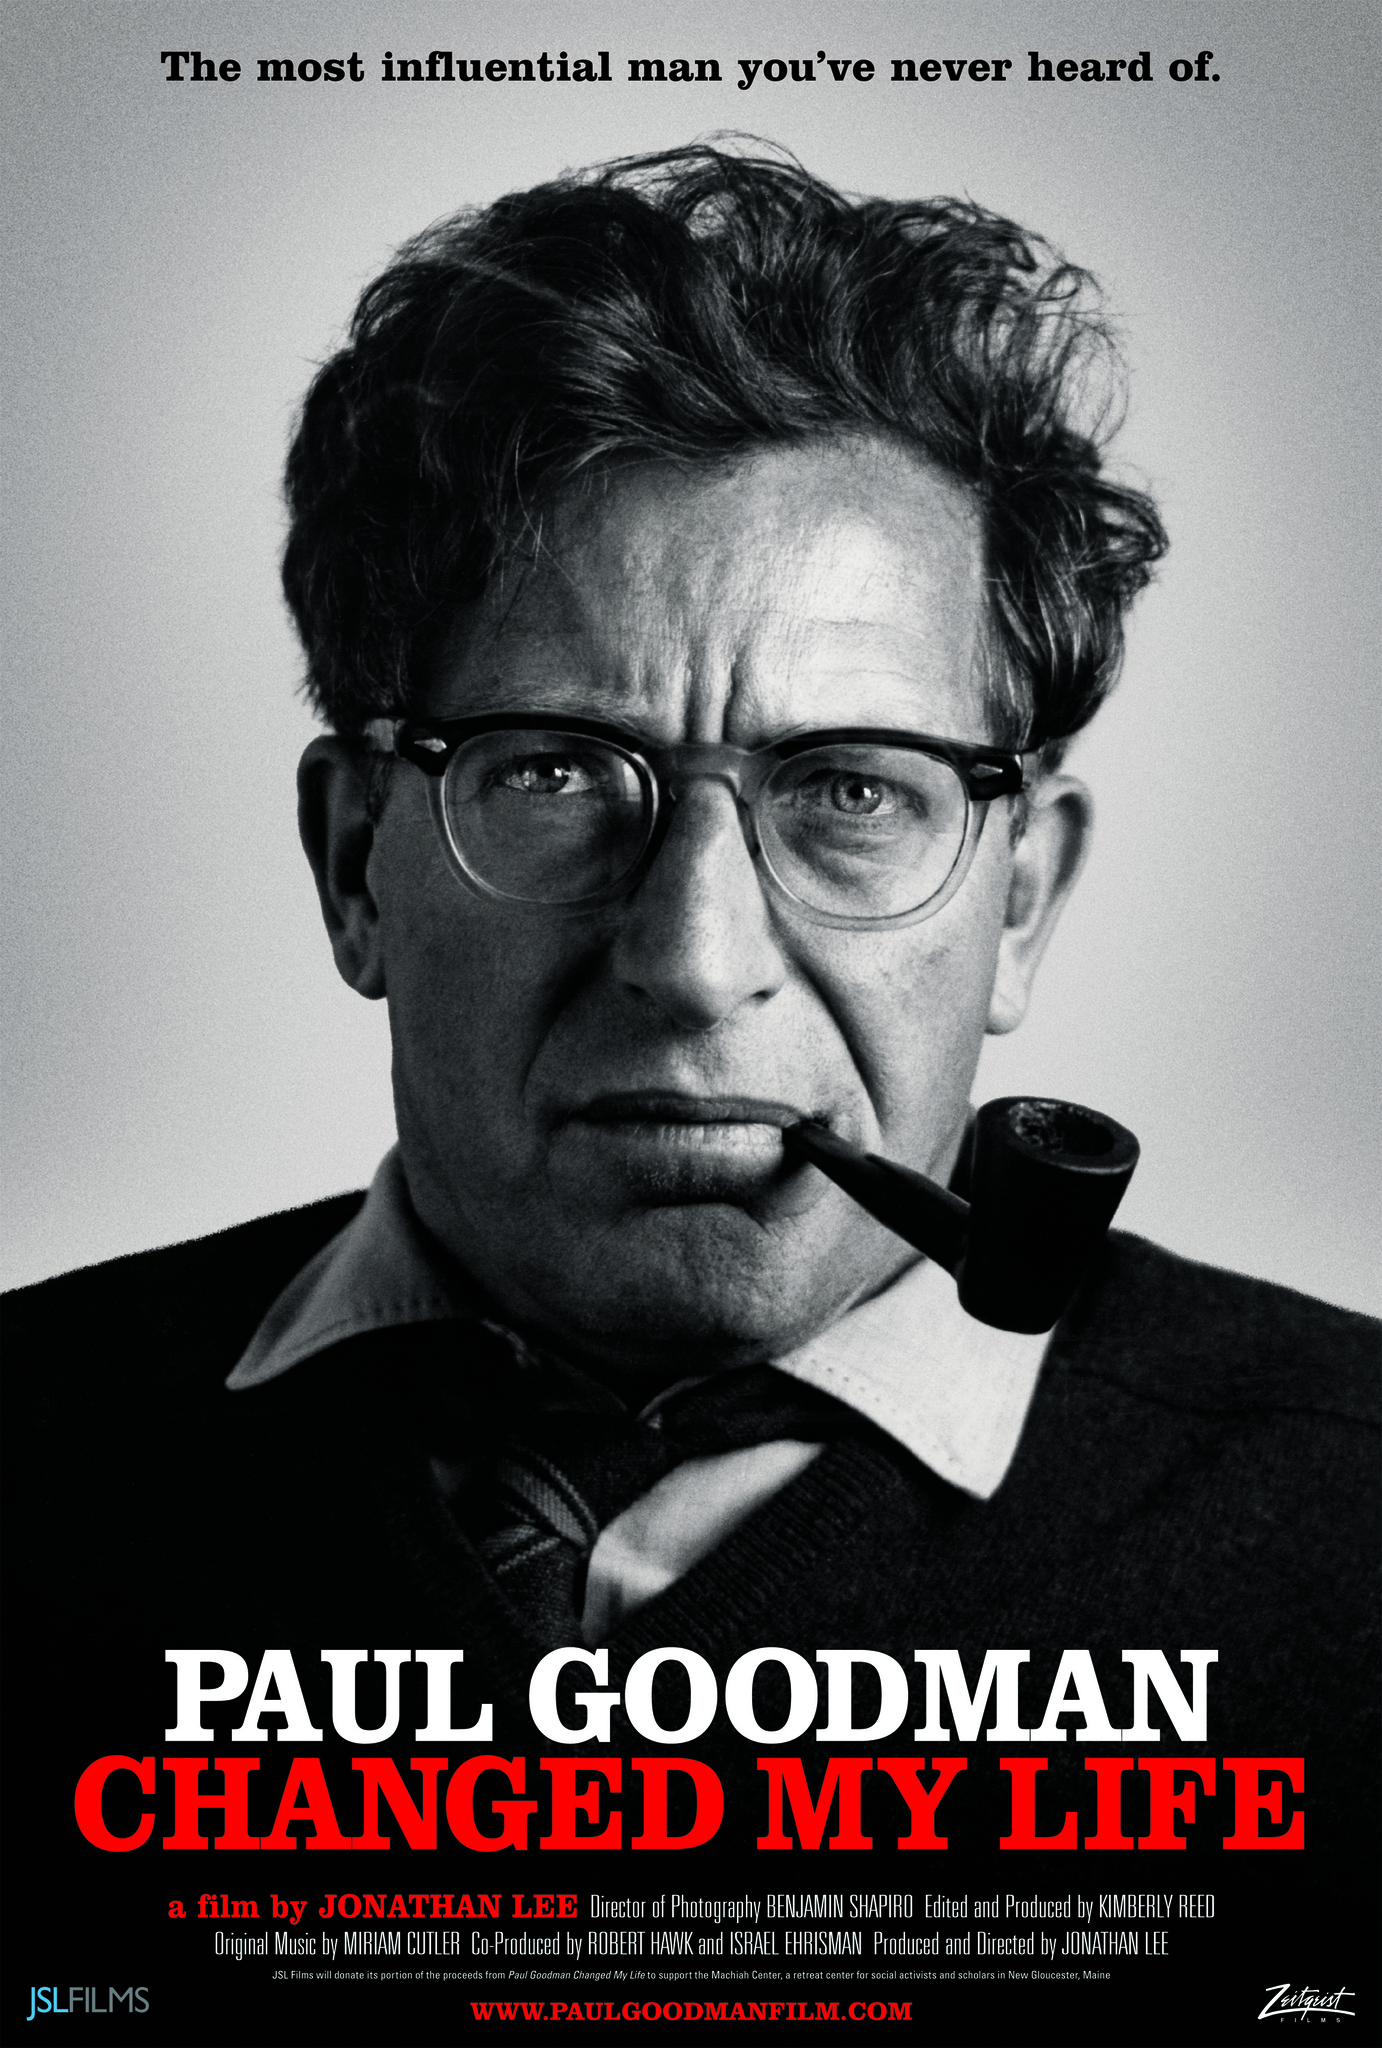 Paul Goodman Changed My Life (2011) starring Paul Goodman on DVD on DVD